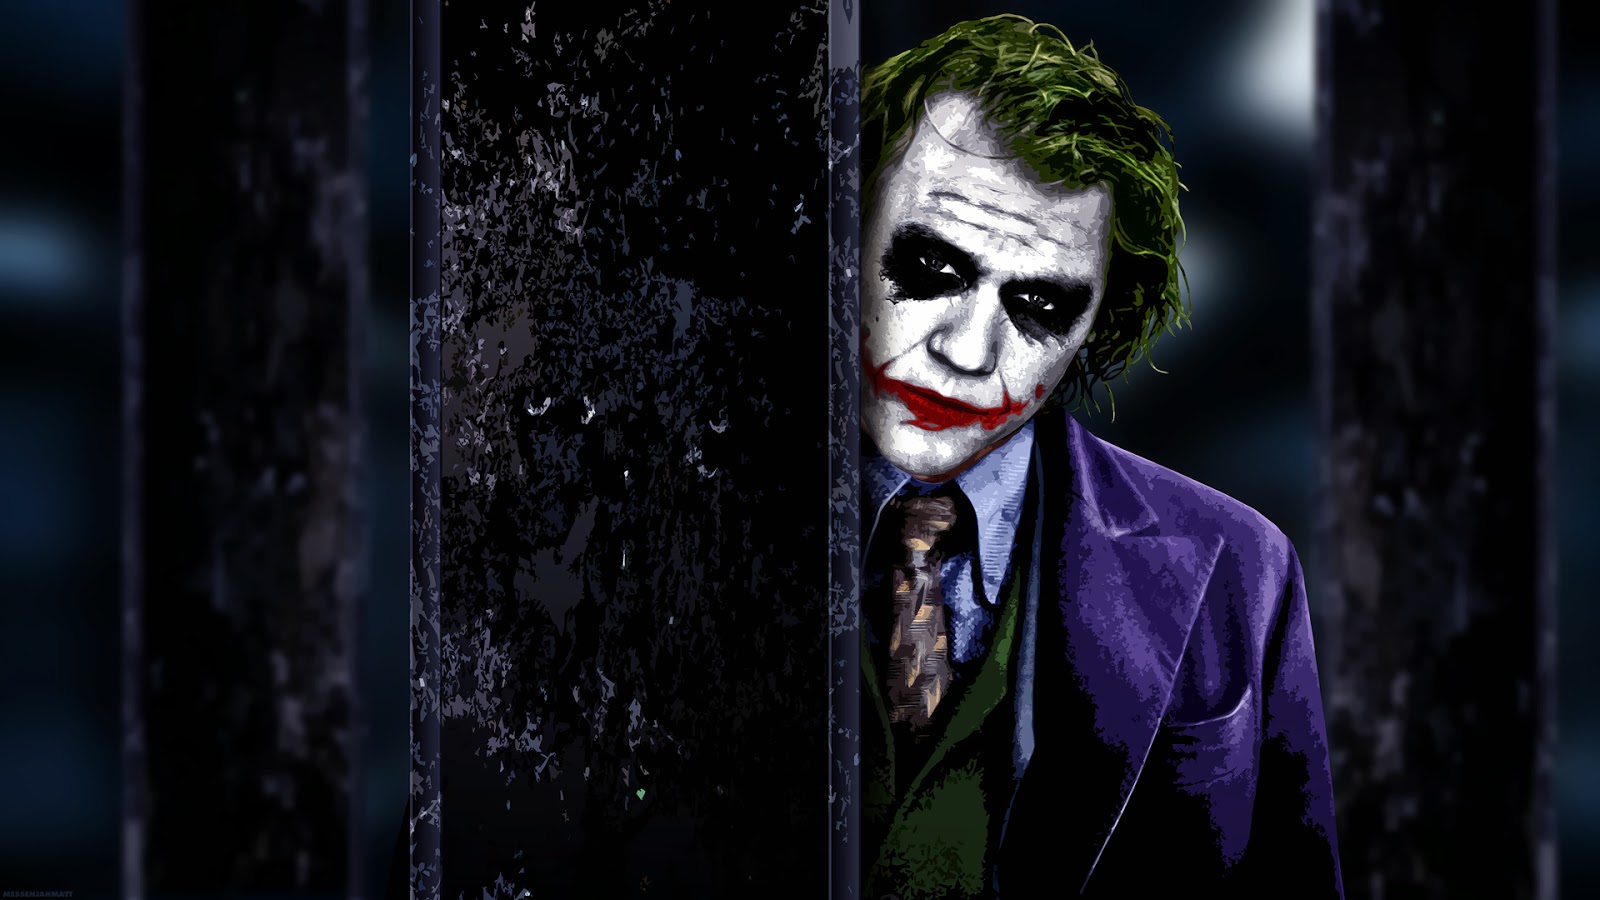 Free download Joker HD Wallpapers joker backgrounds widescreen joker